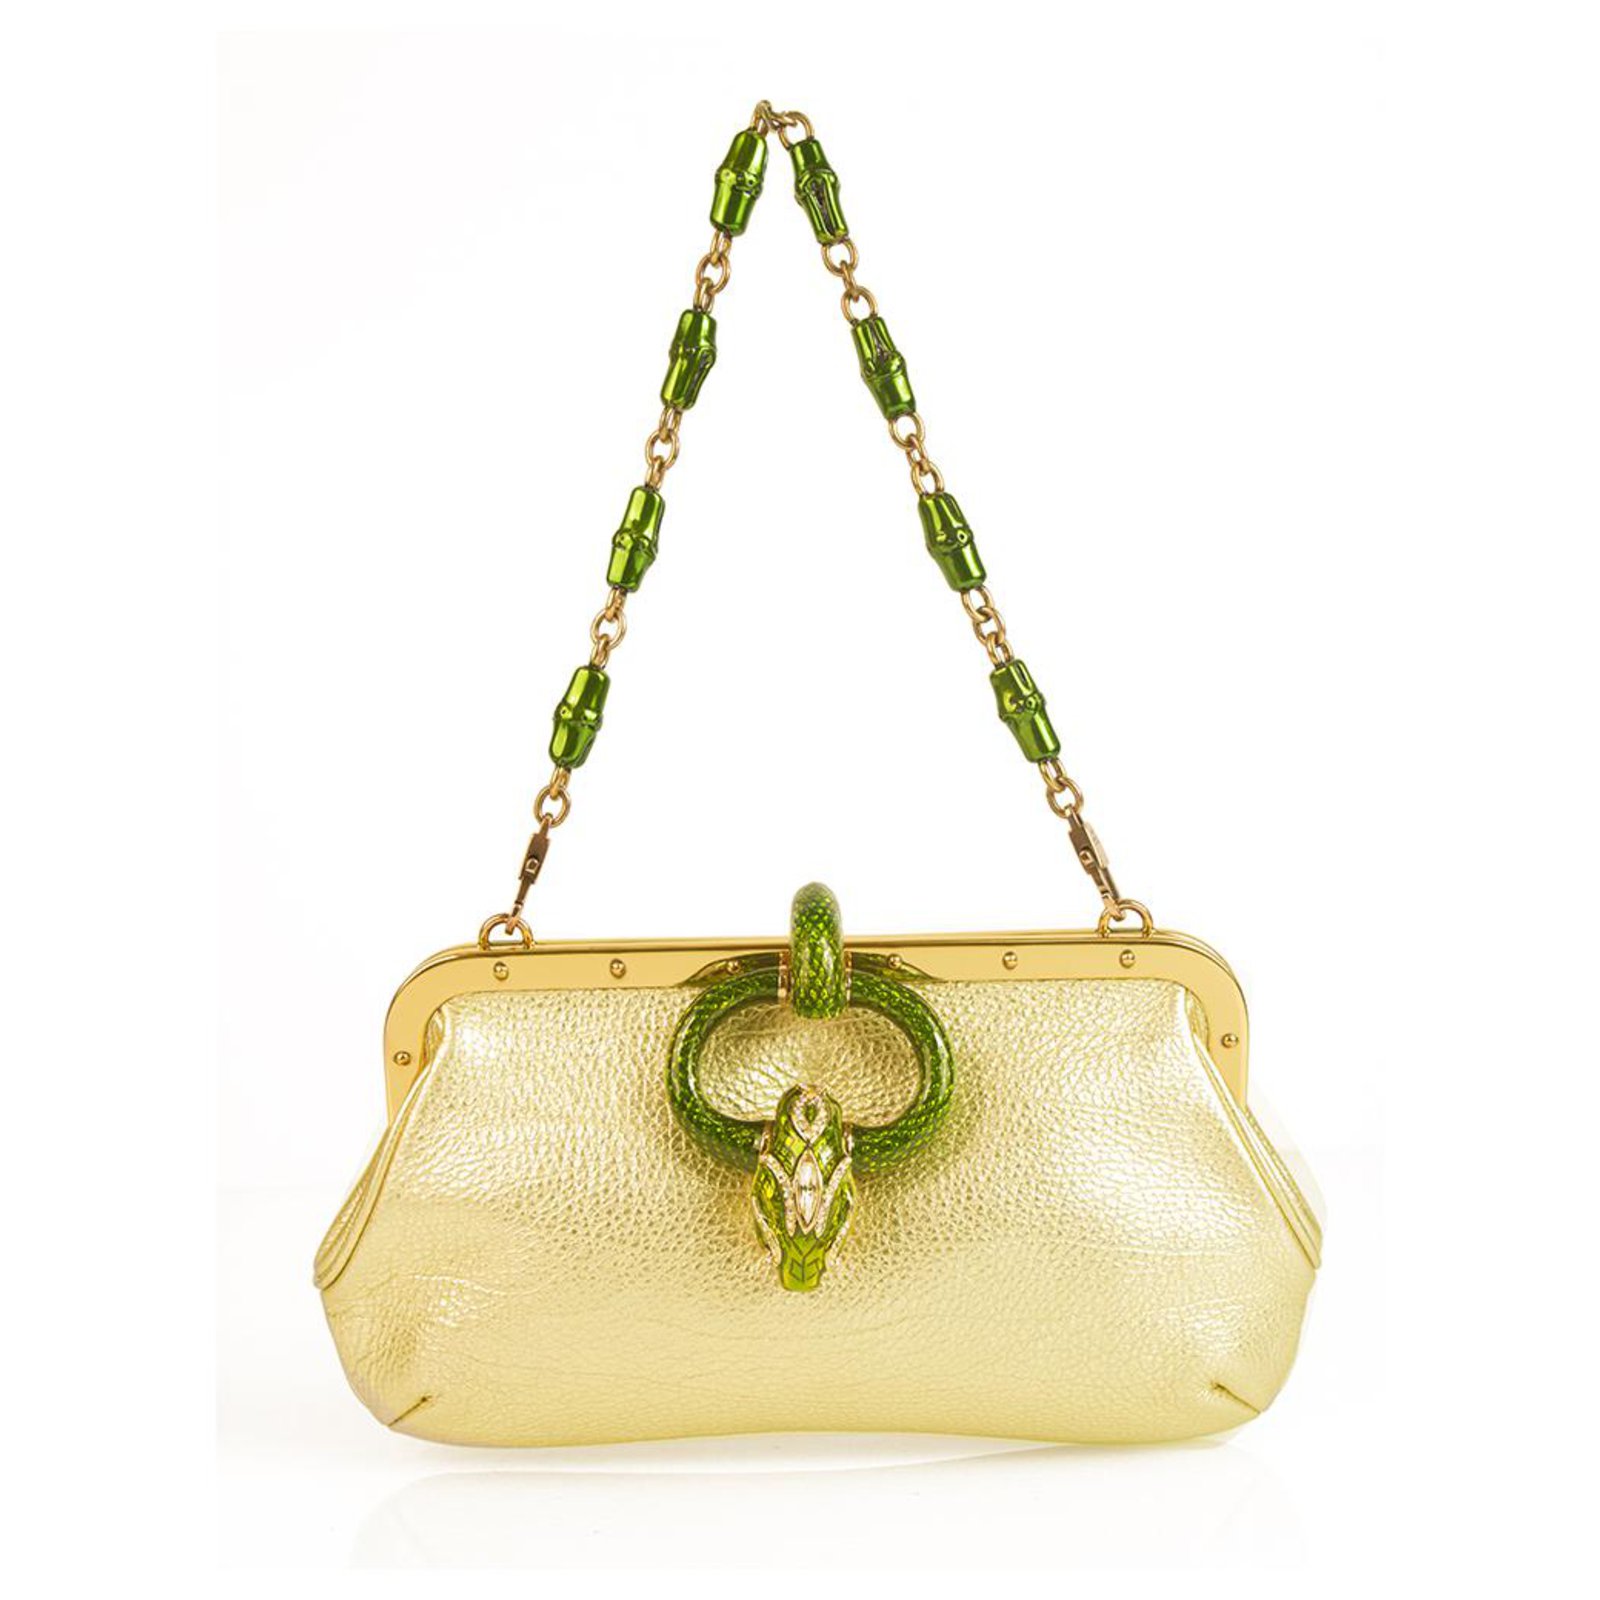 Gucci Tom Ford Gold Leather Green Enamel Snake Handbag S/S 2004 bamboo ...